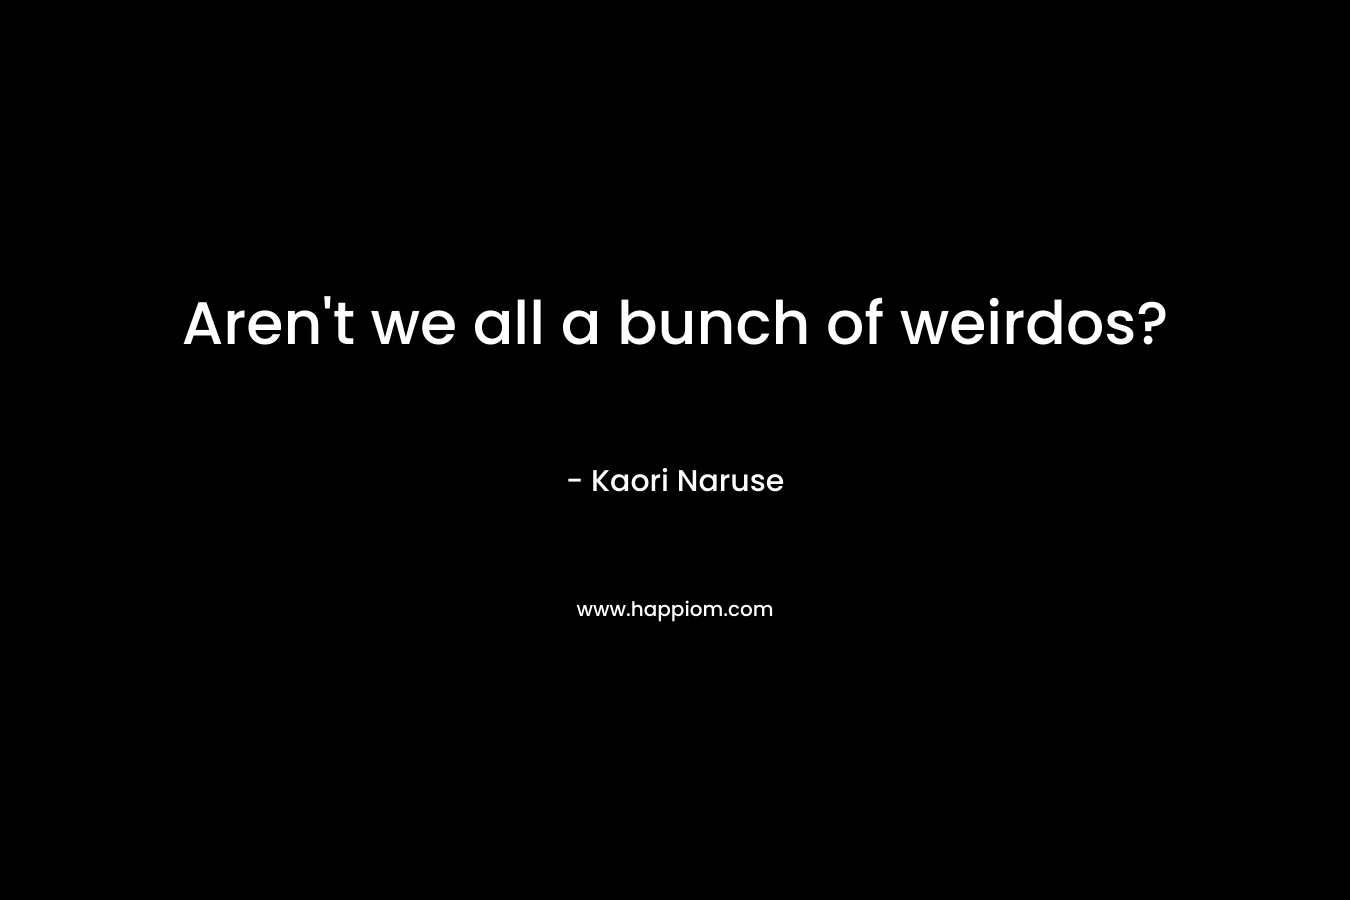 Aren’t we all a bunch of weirdos? – Kaori Naruse